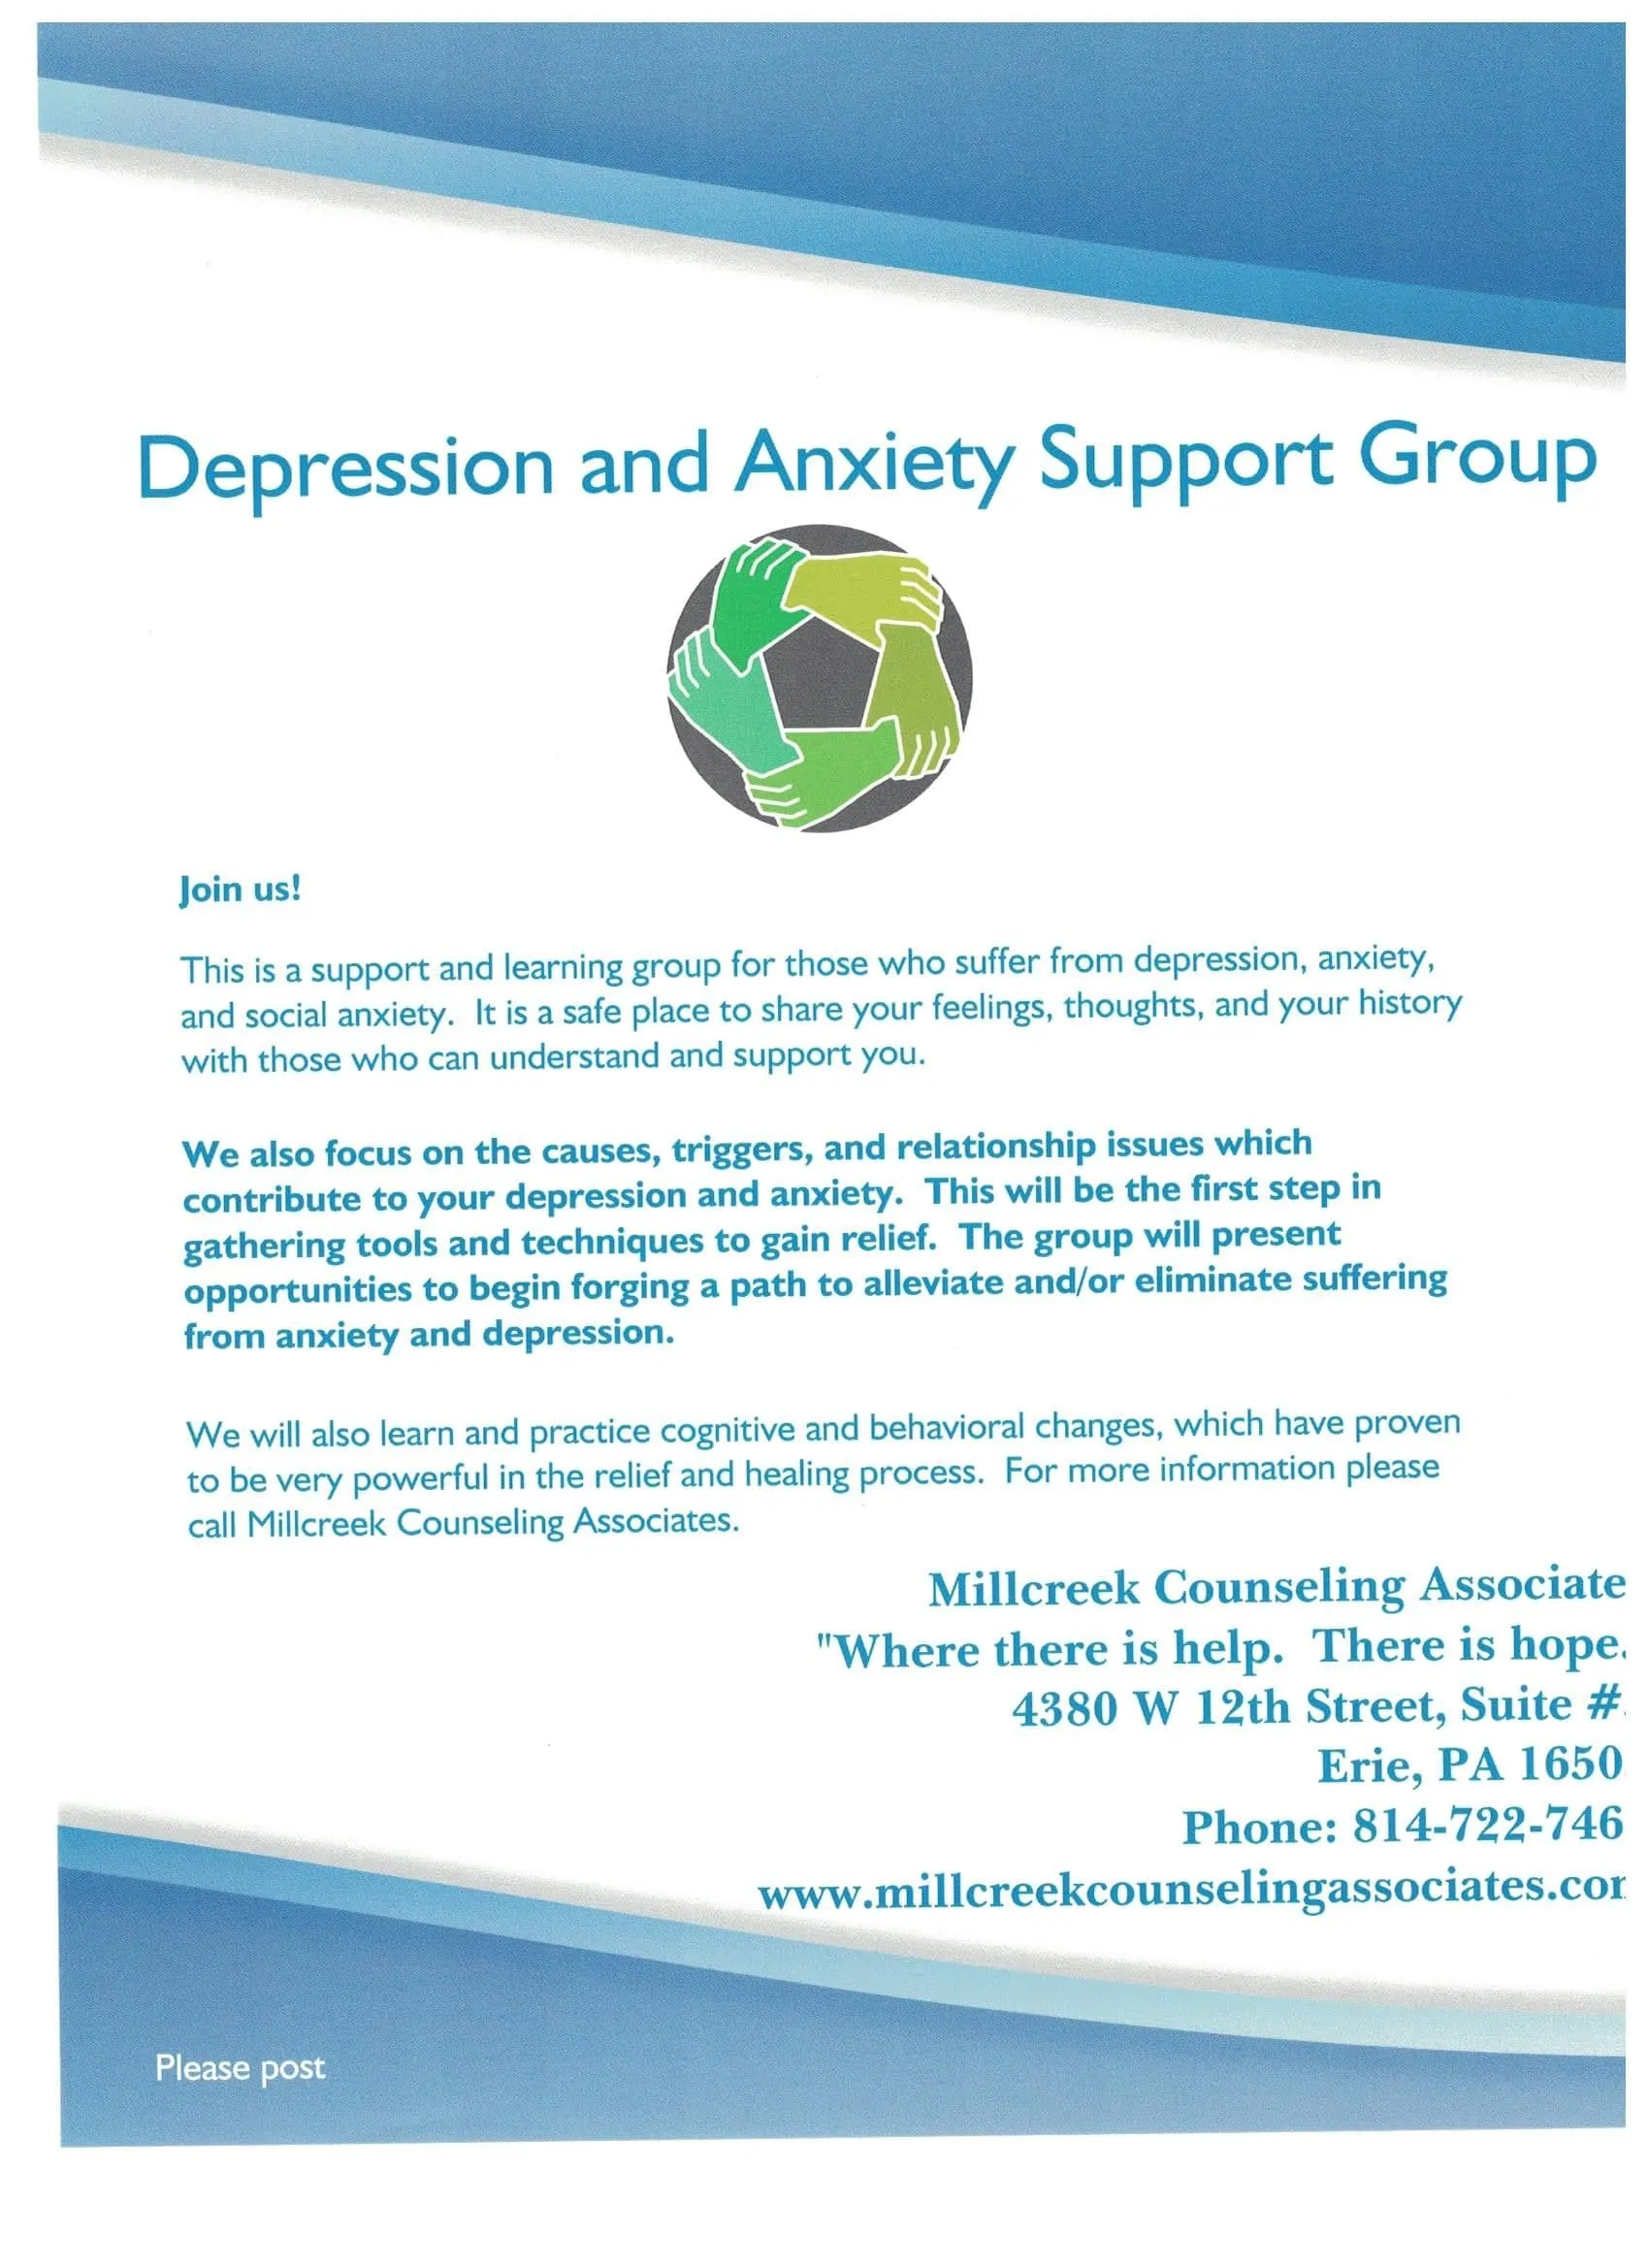 Depression Support